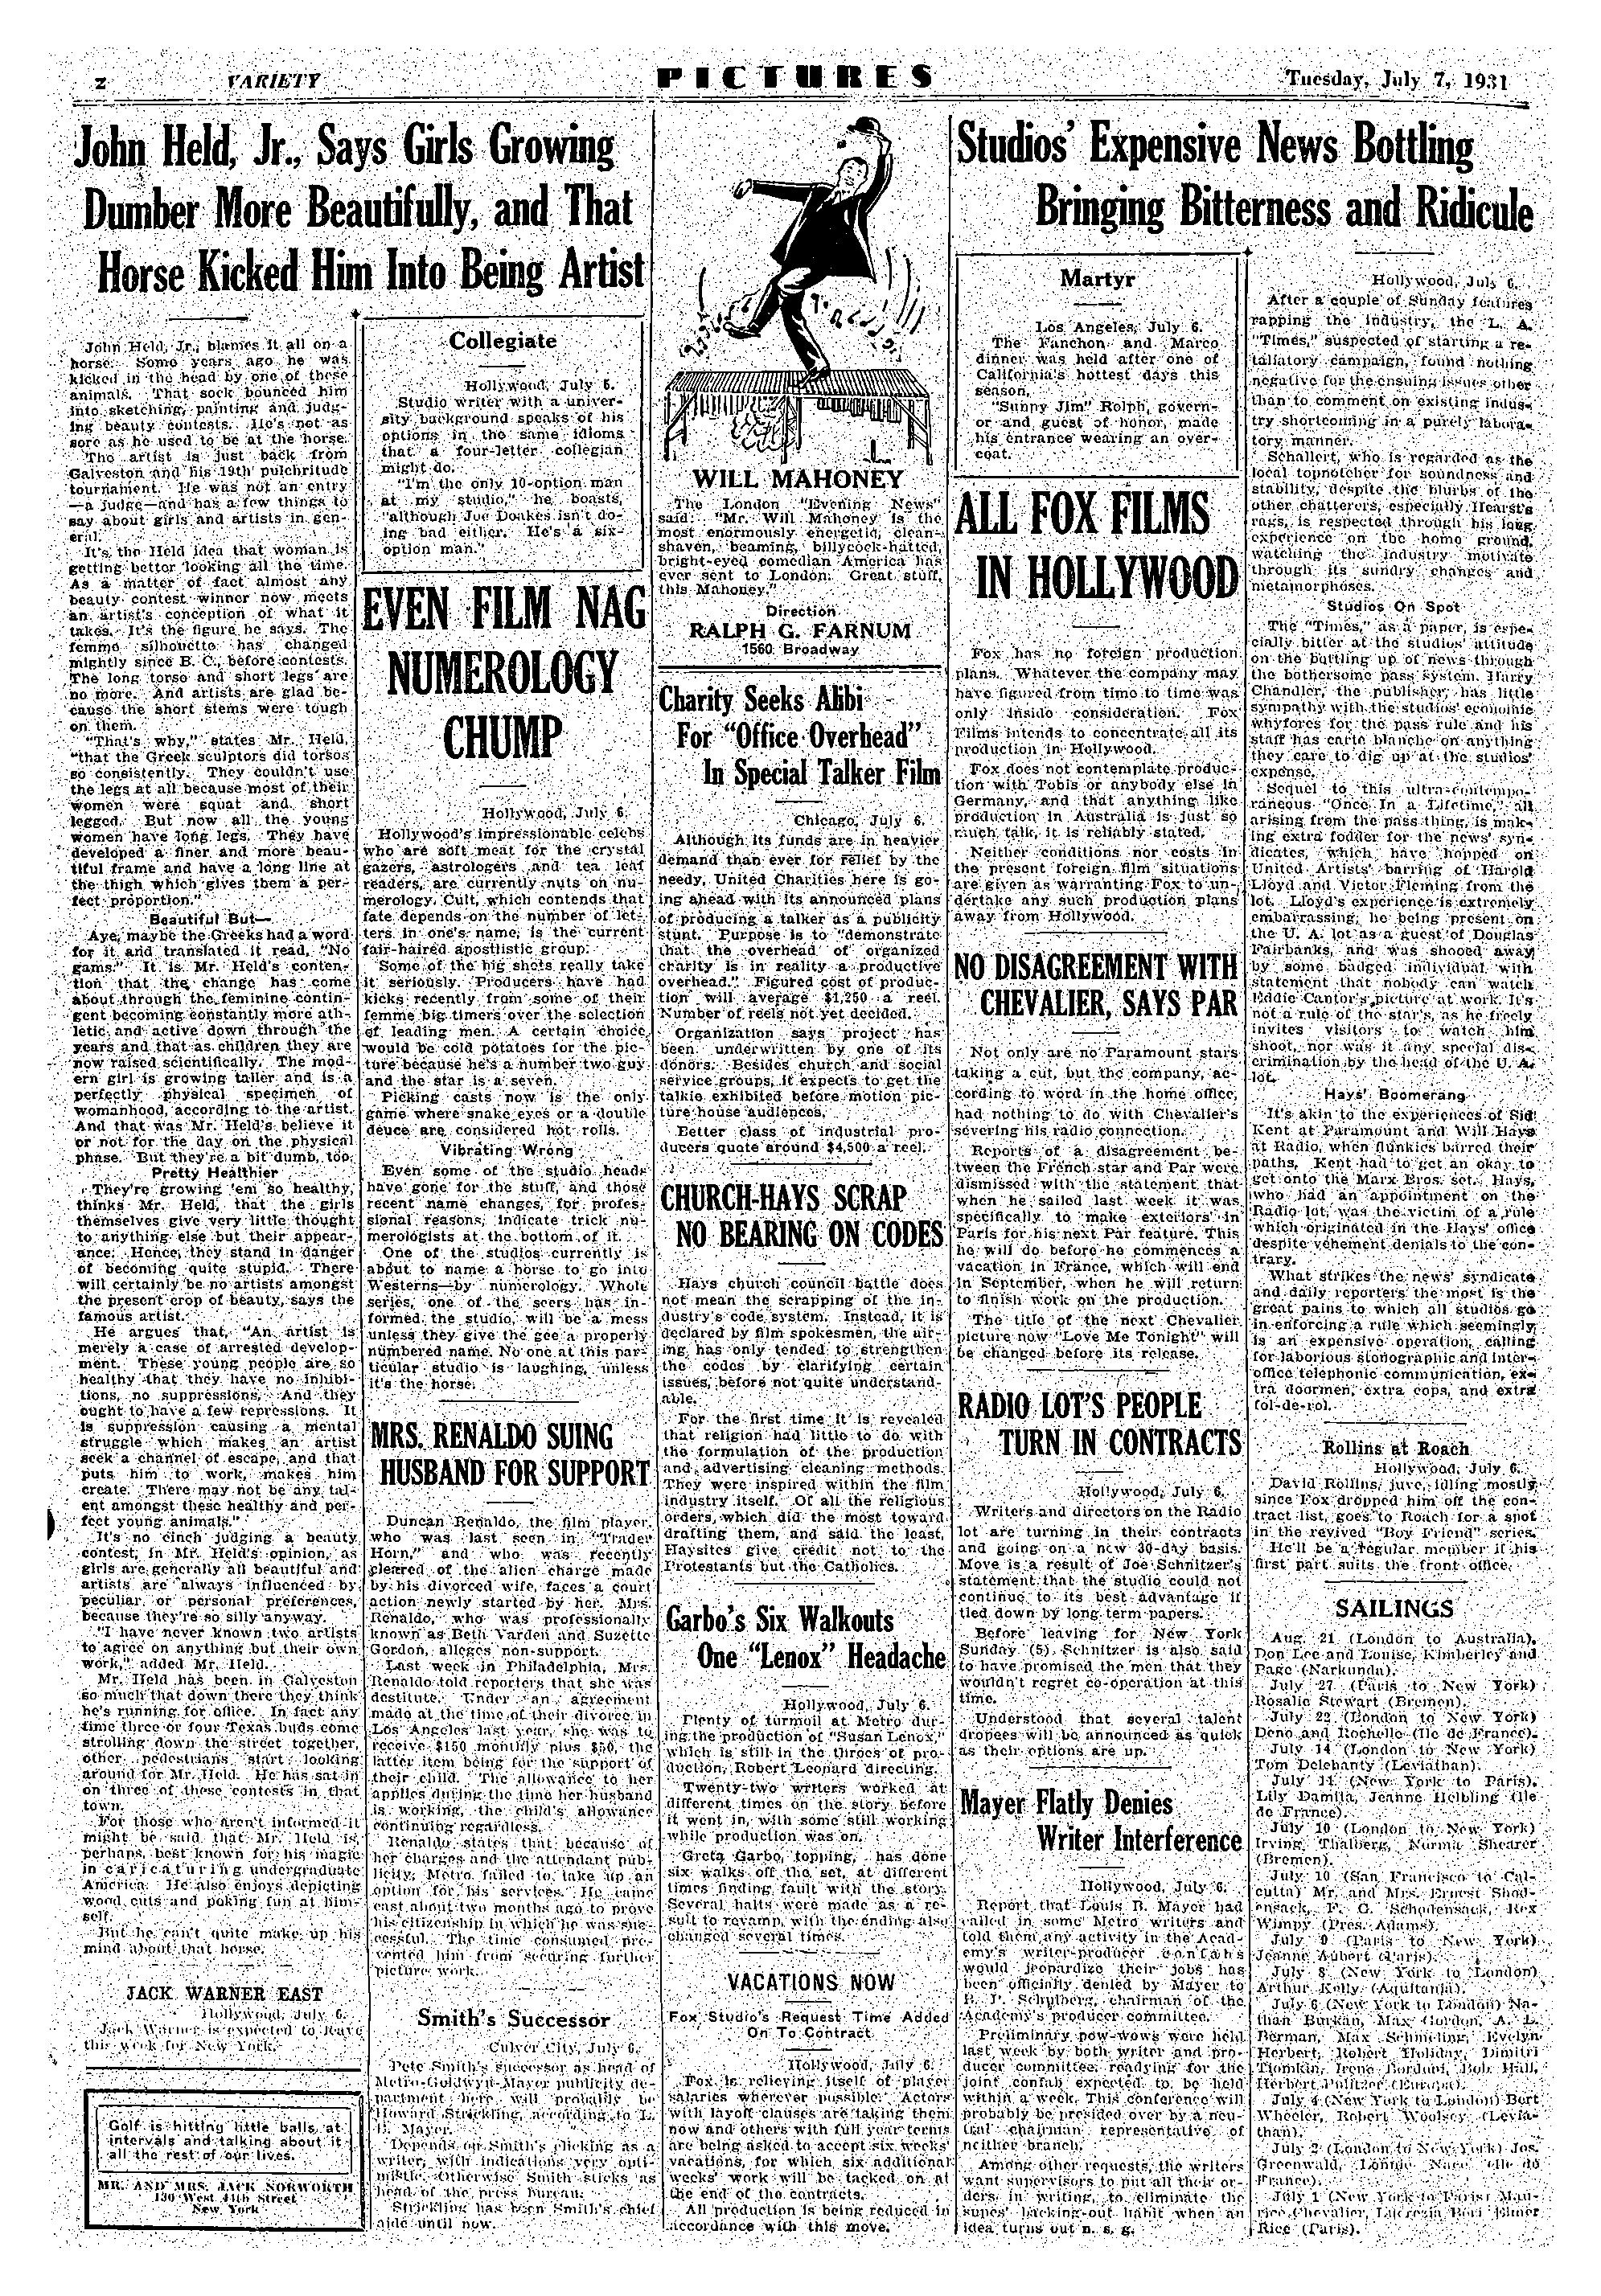 Variety (July 1931)